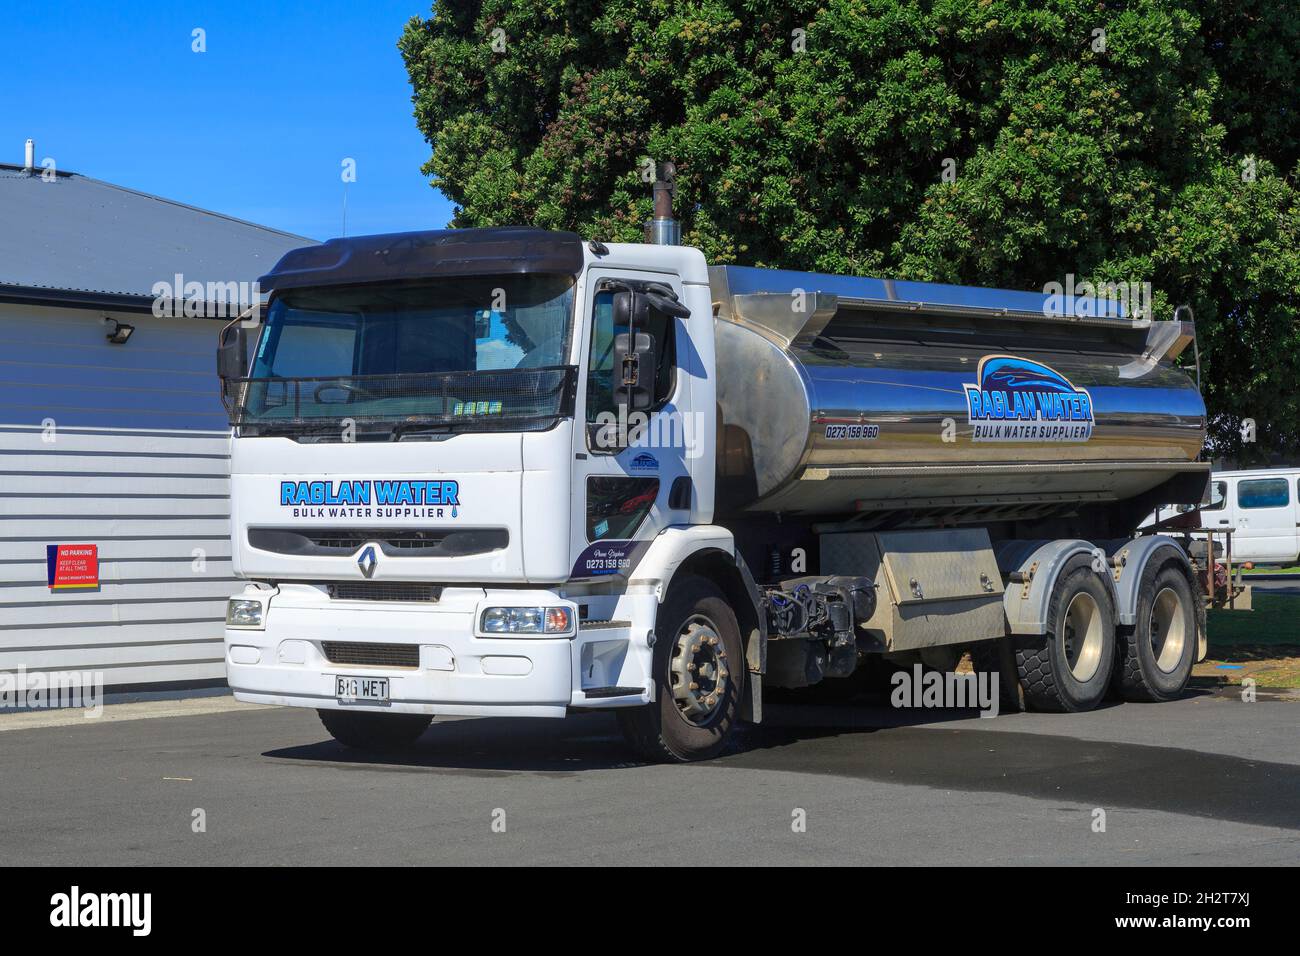 A water tanker of the Raglan Water company, Raglan, New Zealand Stock Photo